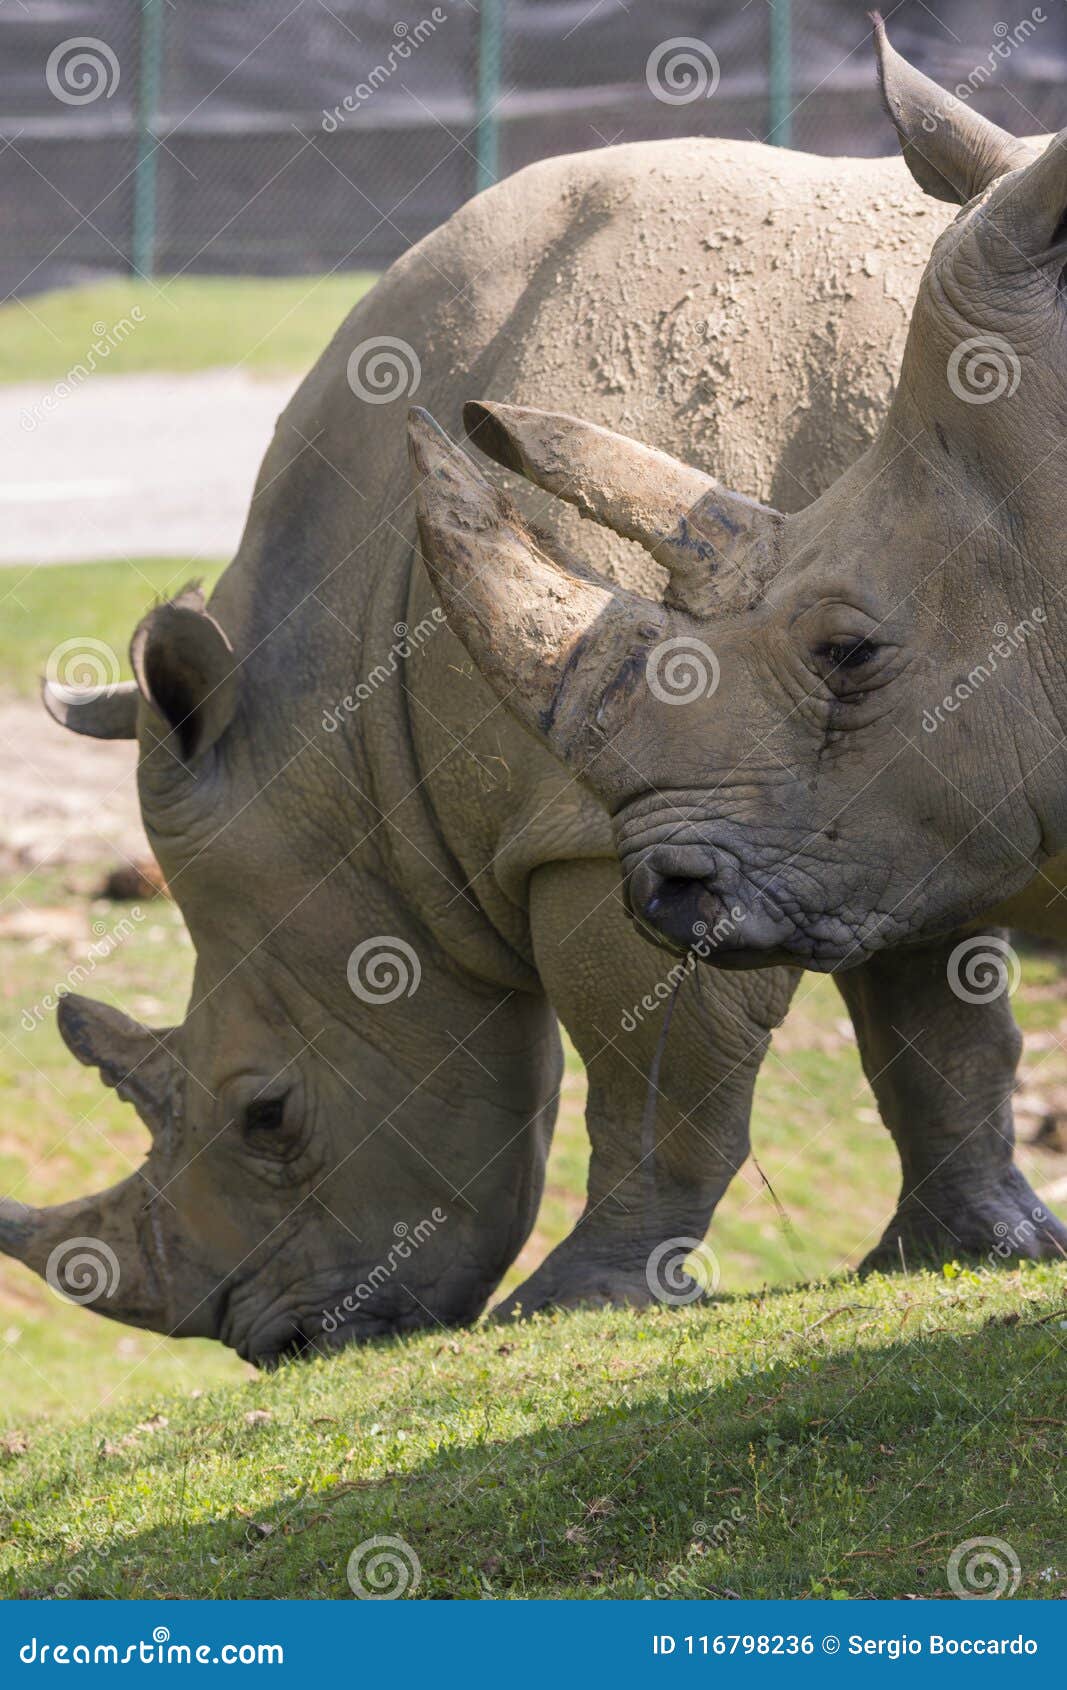 rhino in a zoo in italy